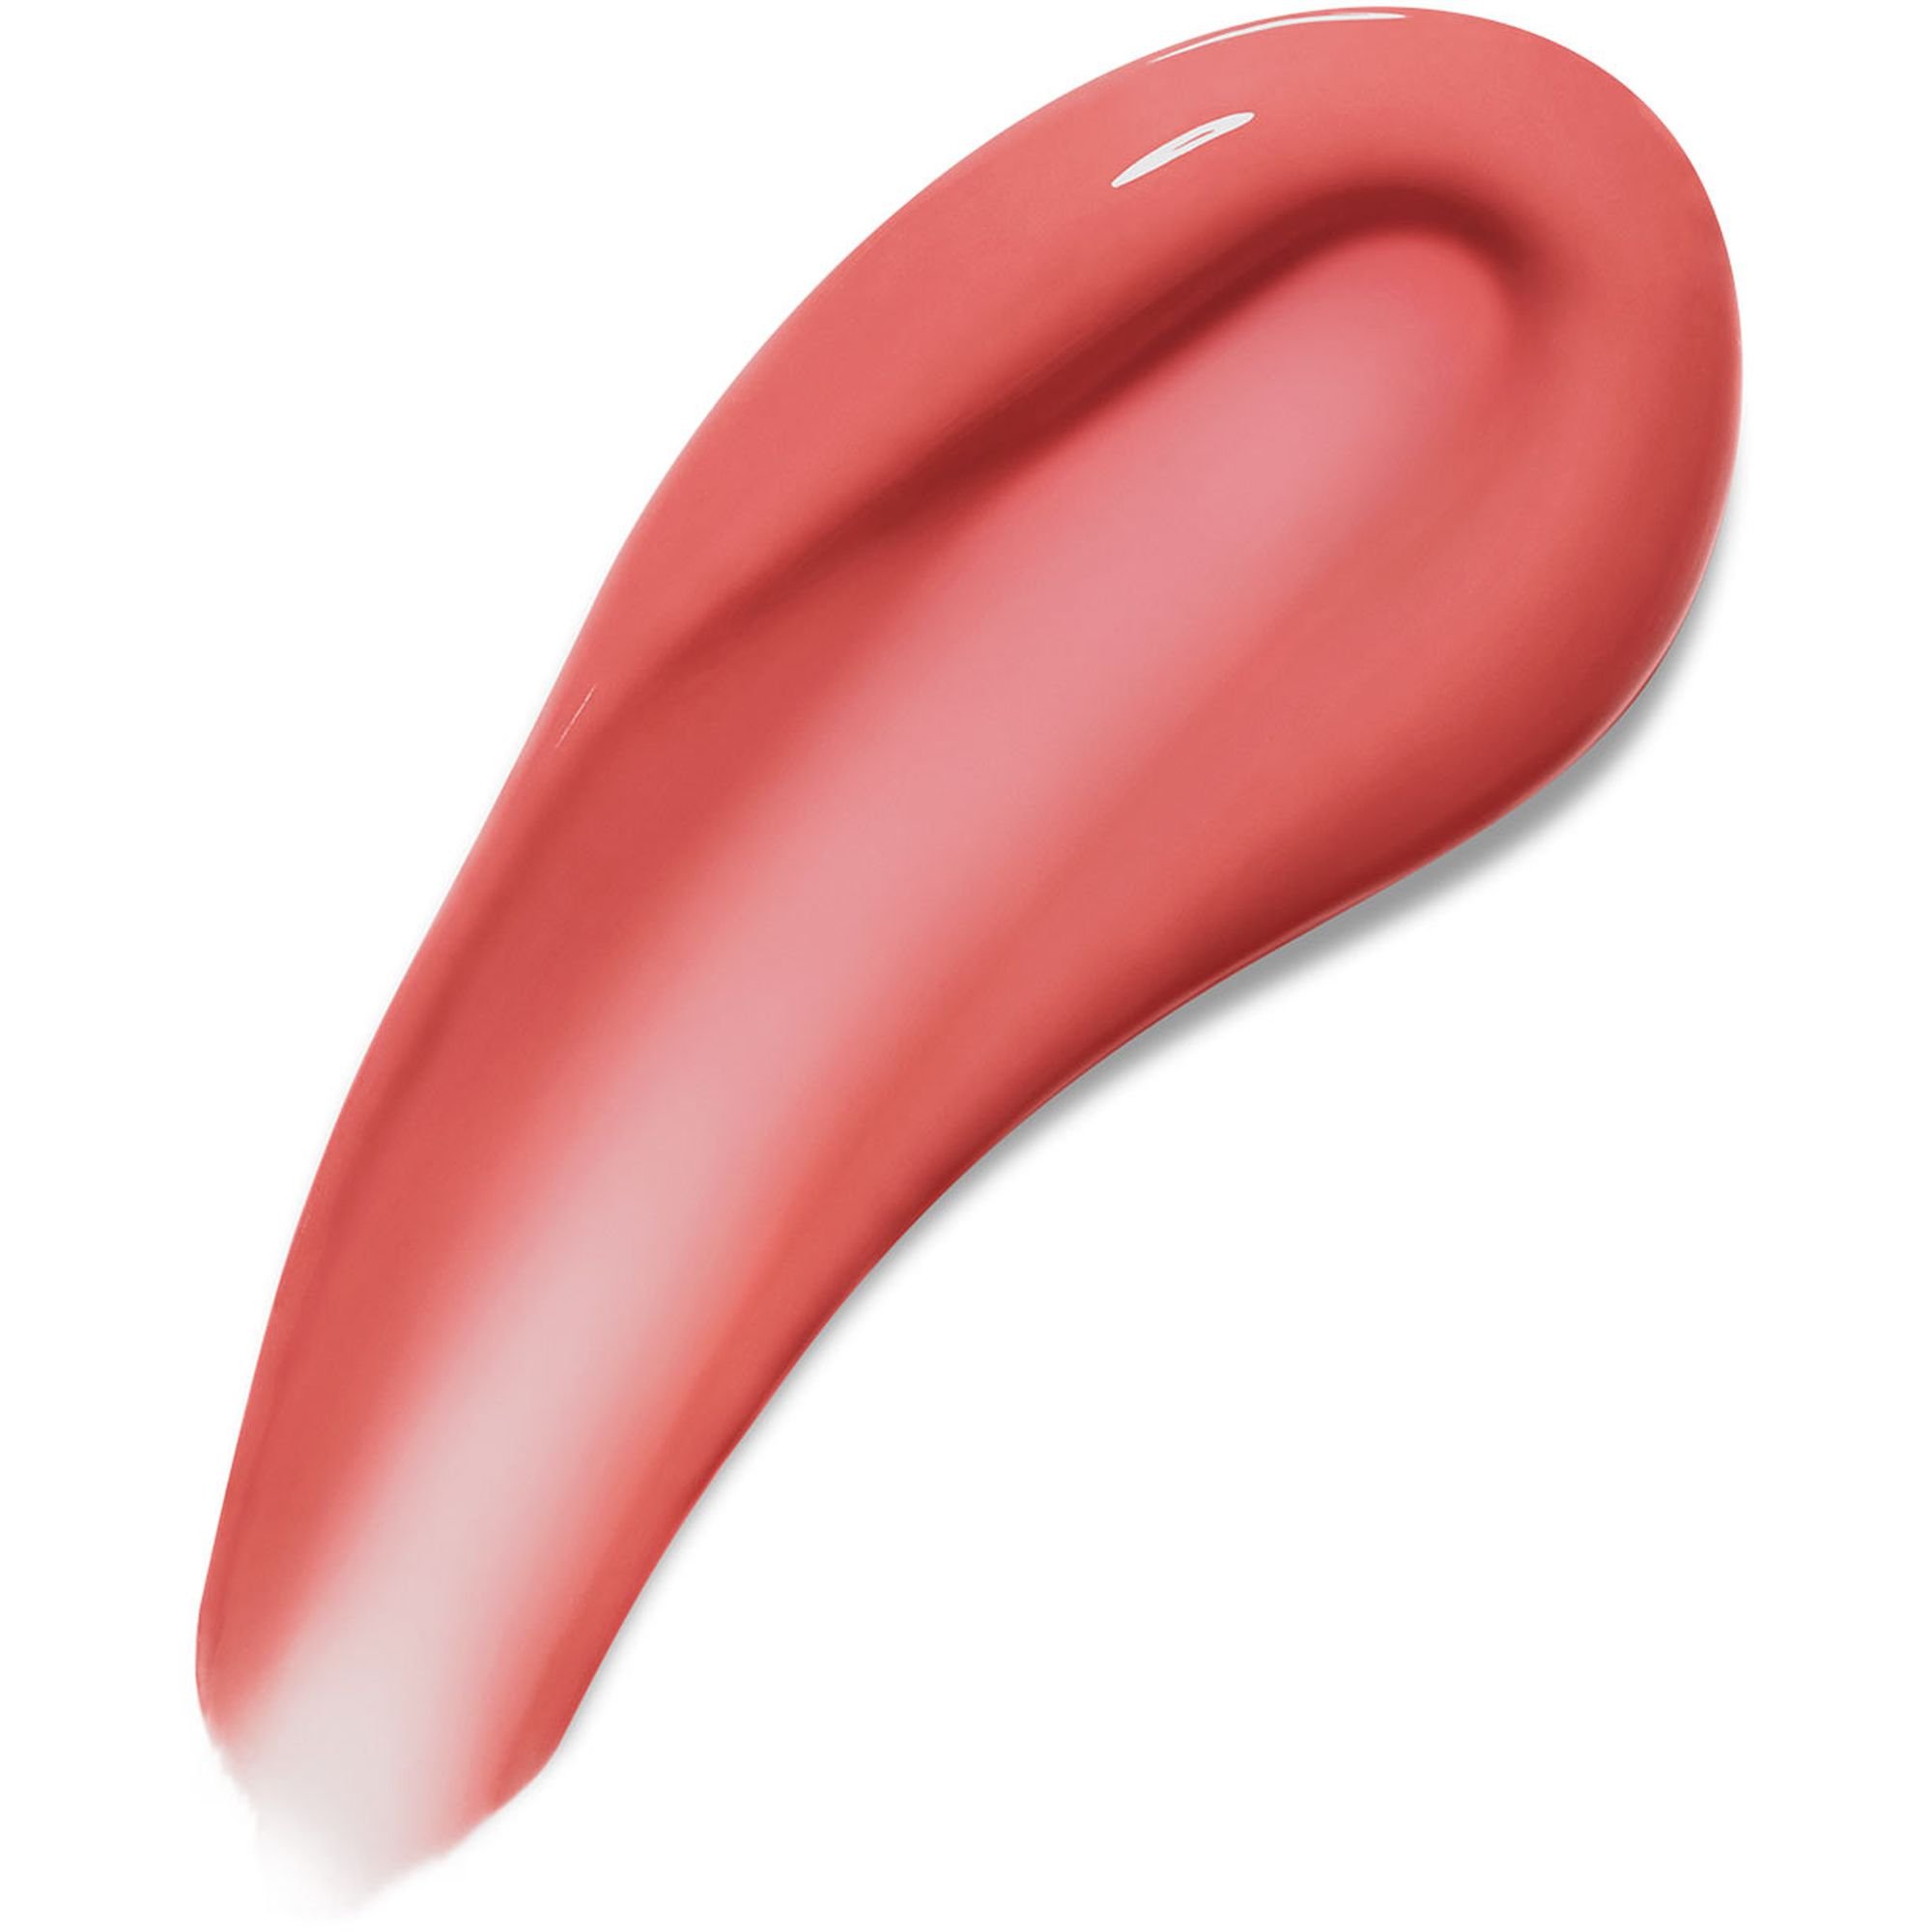 Блеск-плампер для губ Maybelline New York с перцем чили 005 Peach fever 5.4 мл (B3486300) - фото 2